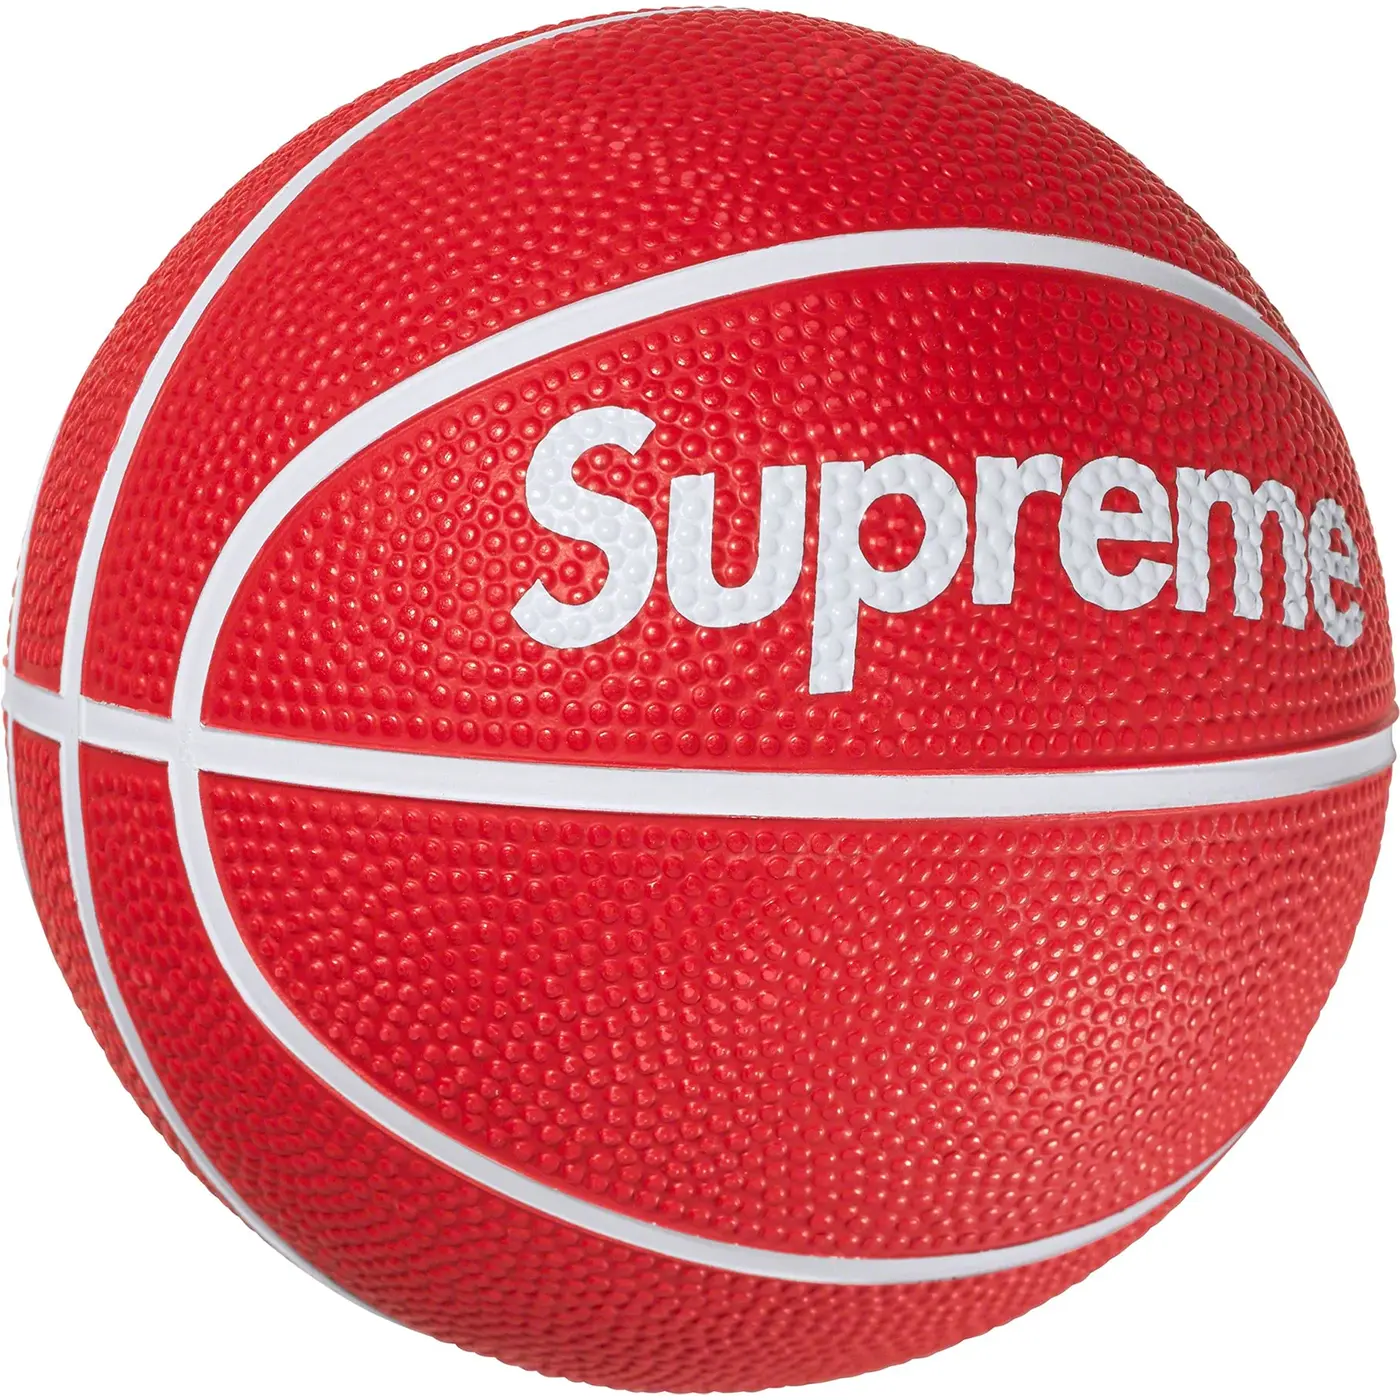 Supreme Supreme®/Spalding® Mini Basketball Hoop